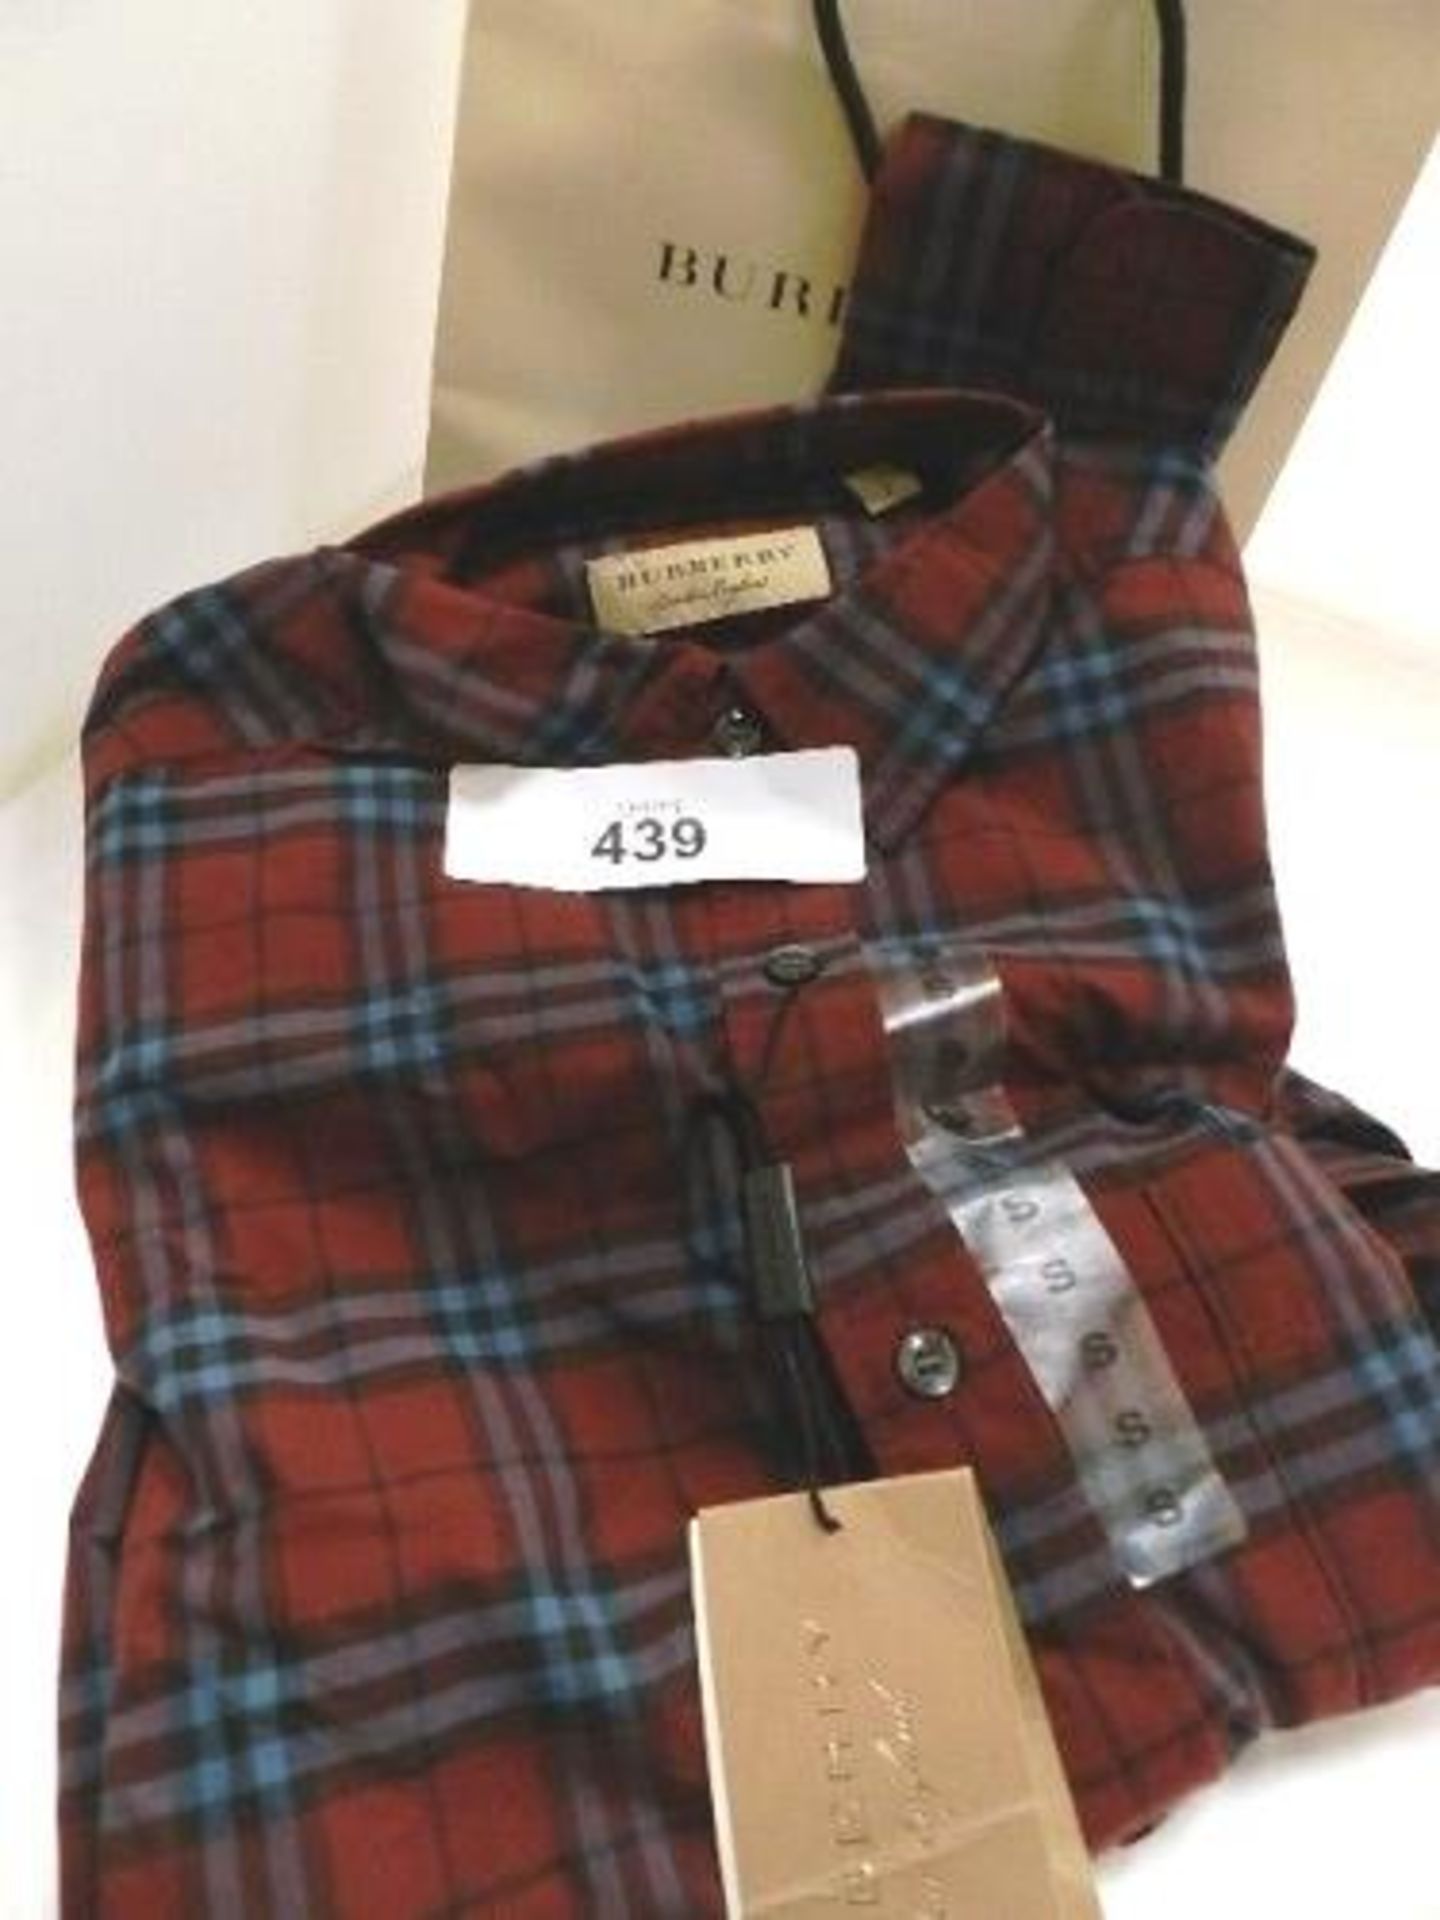 1 x Burberry Alexander crimson long sleeve shirt, size small, RRP £250.00 - New (C13D)